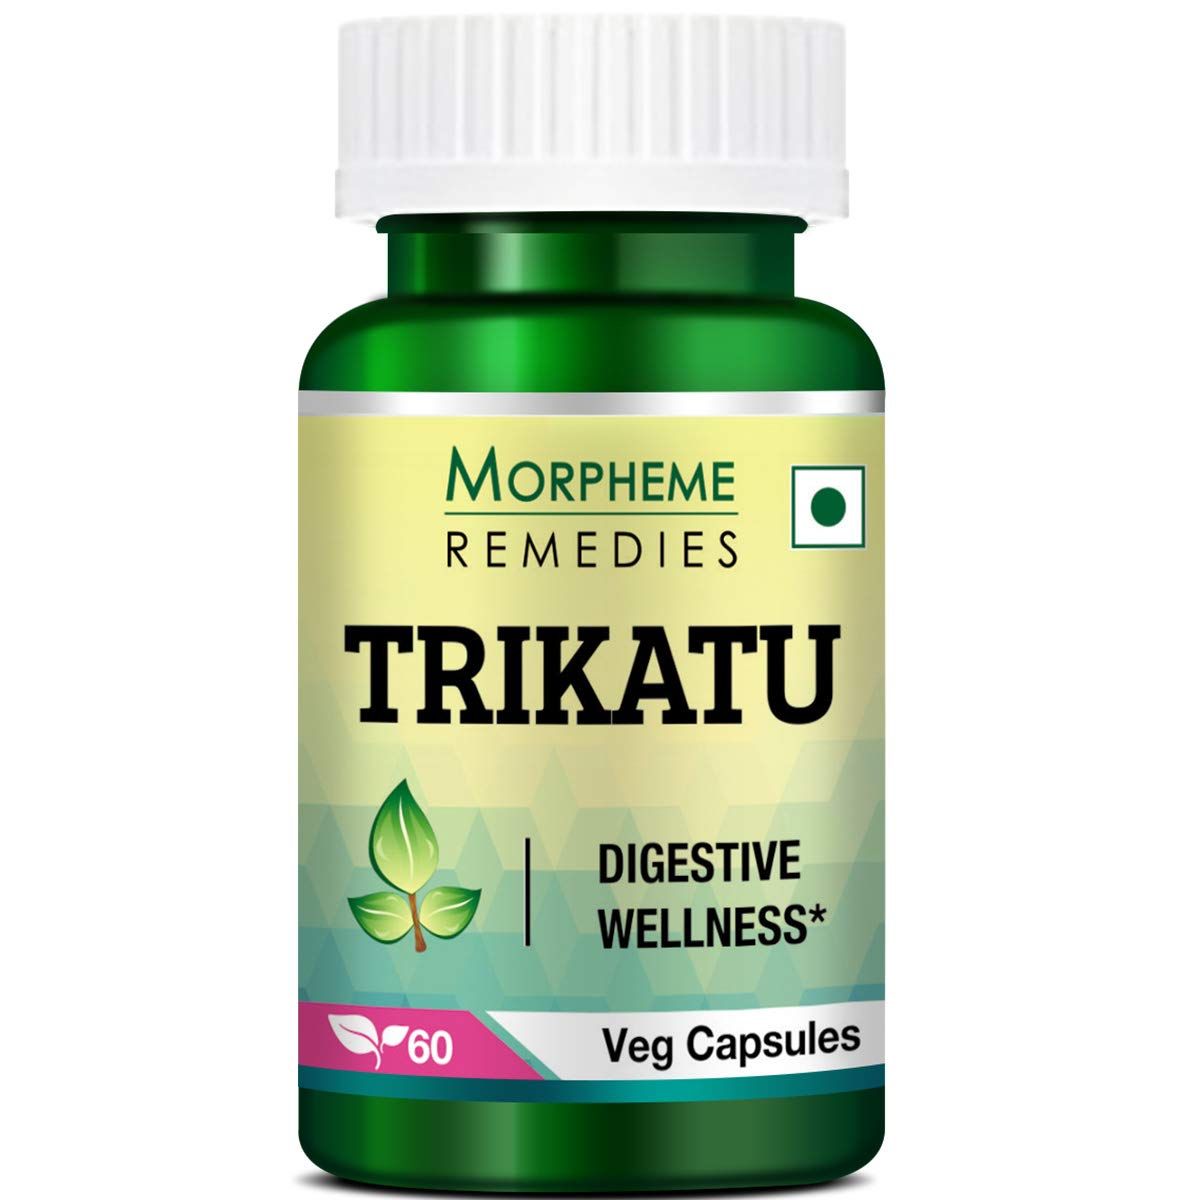 Morpheme Remedies Trikatu Capsules for Digestive Wellness - 500mg Extract